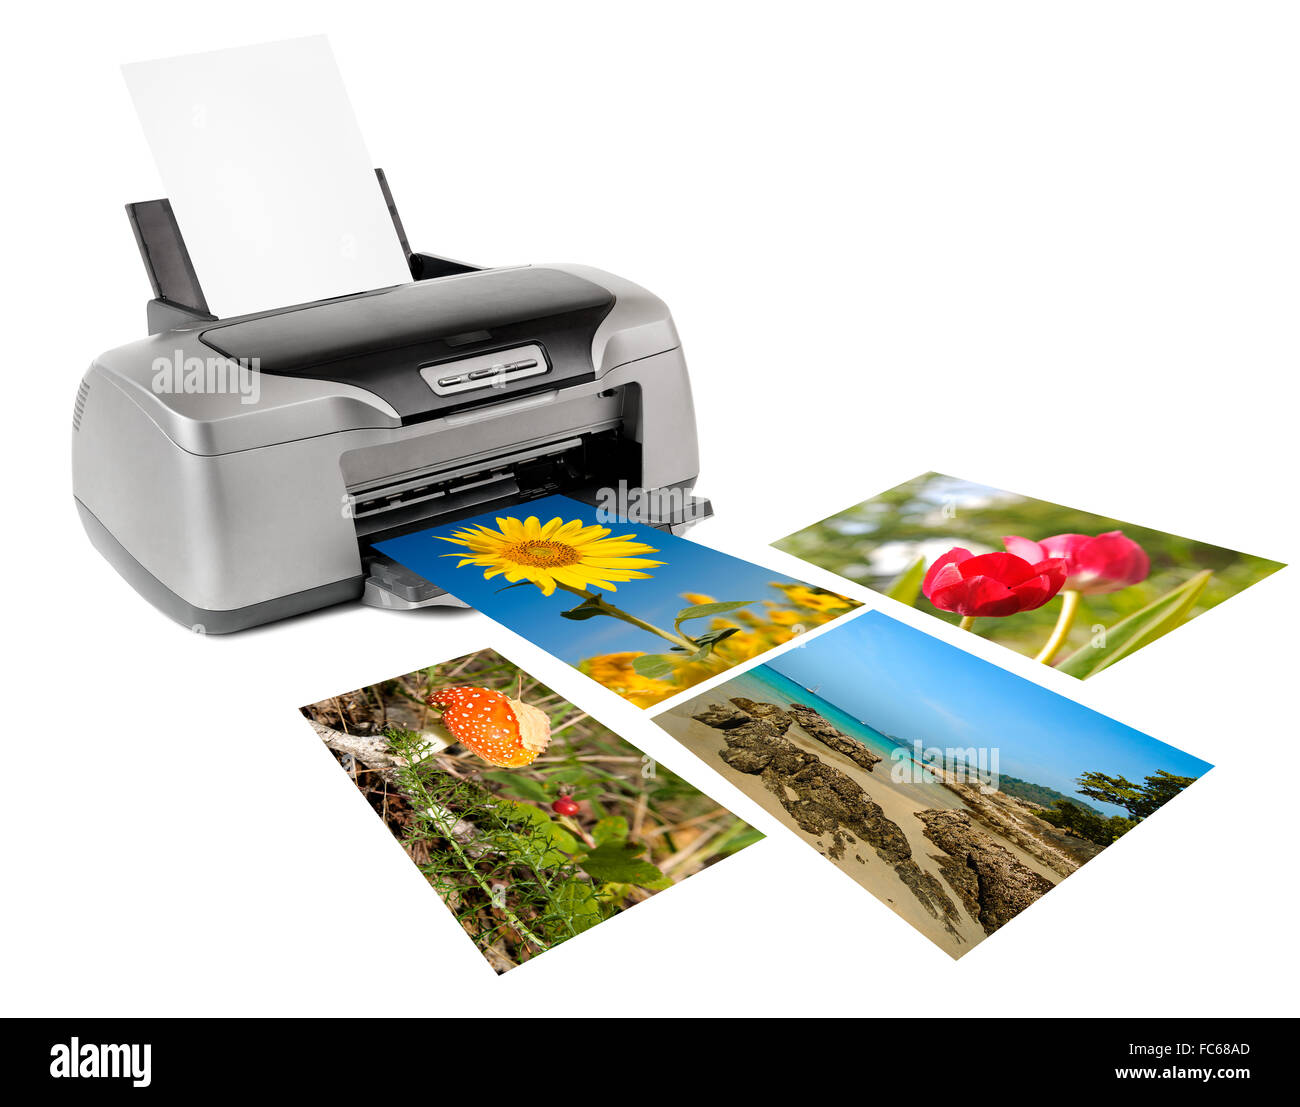 printer Stock Photo